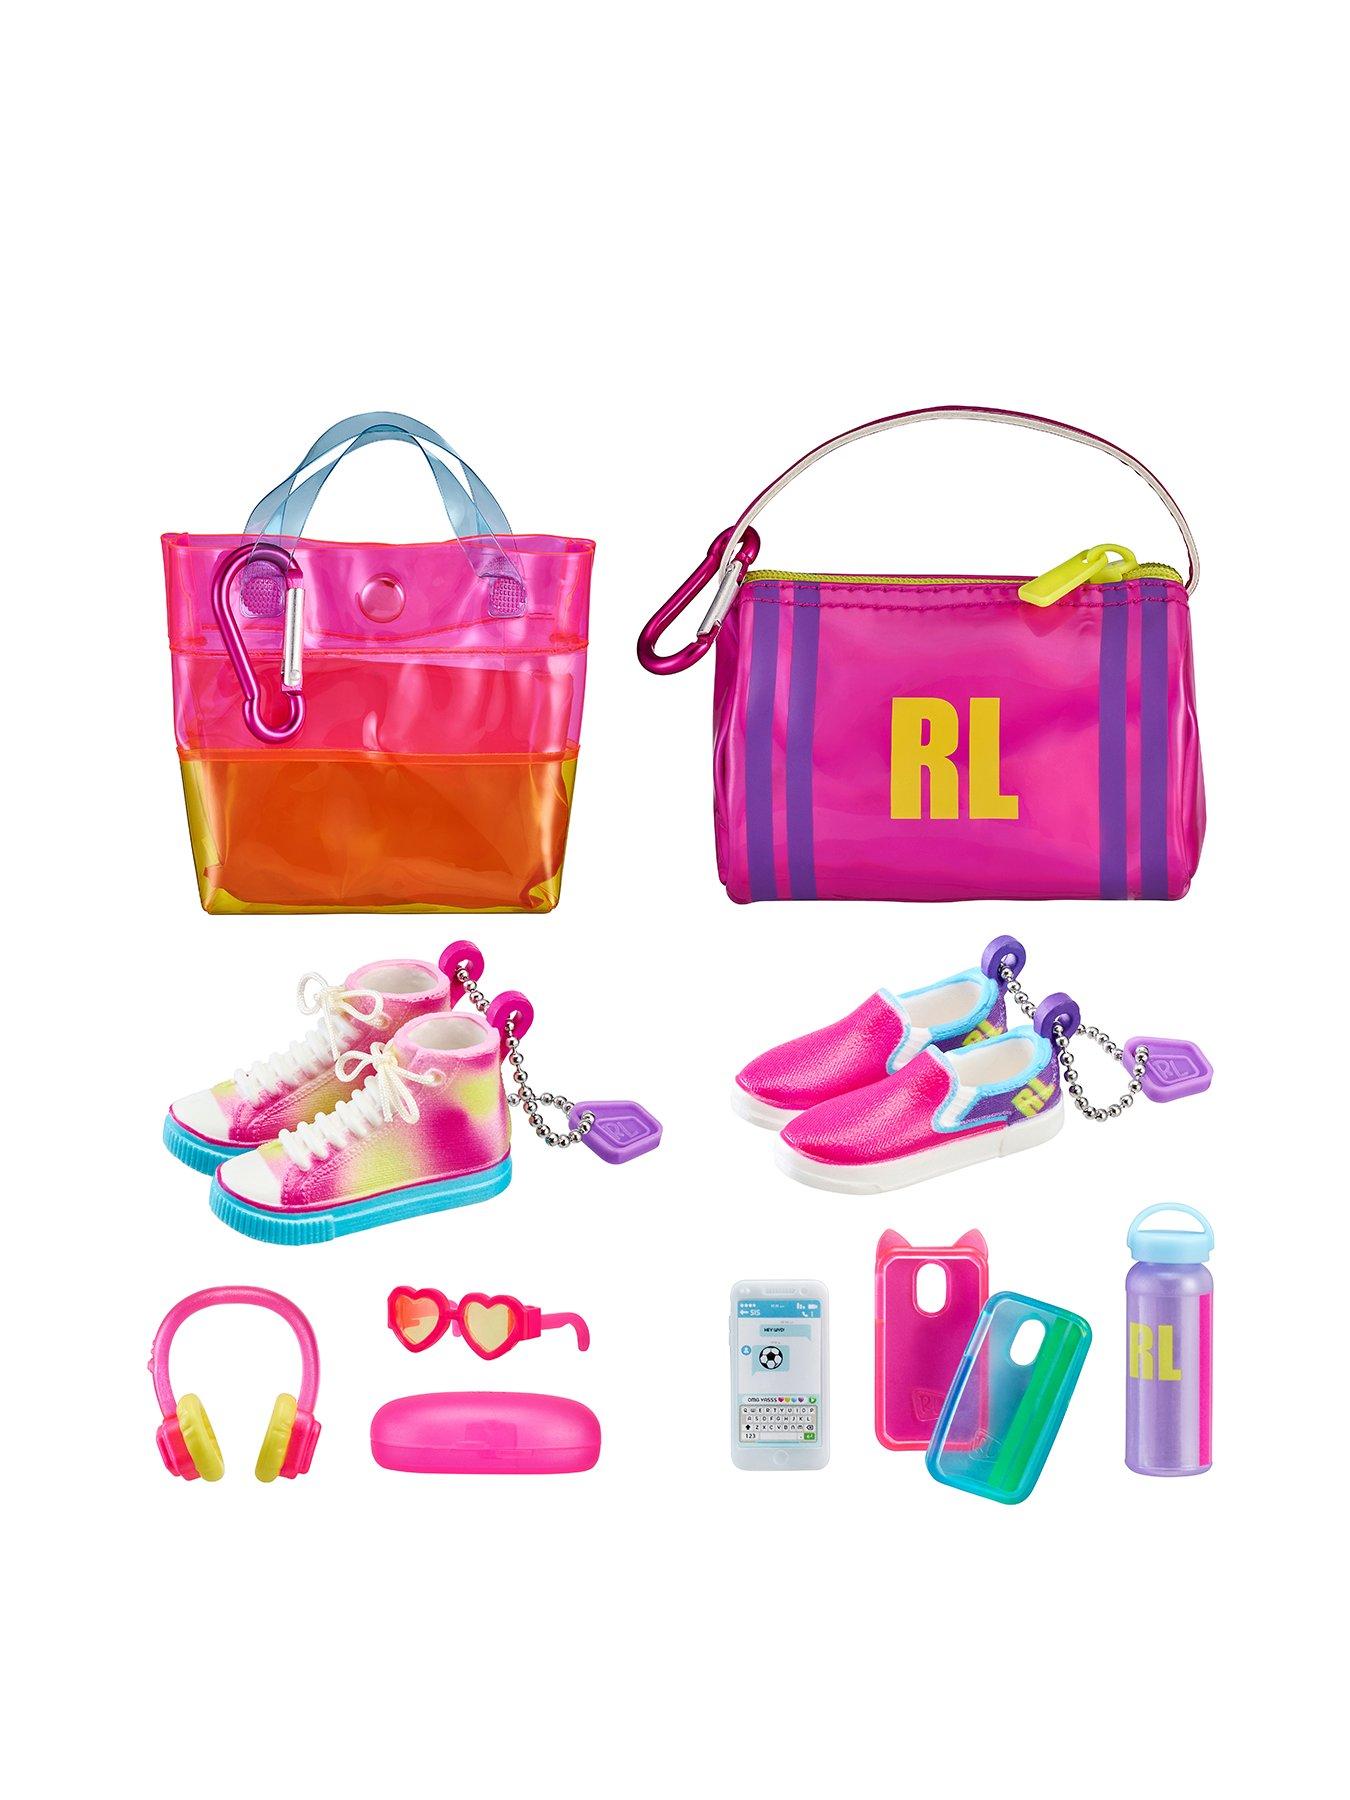 Real Littles - Handbags - Disney - Minnie Mouse Handbag - 7 Surprises